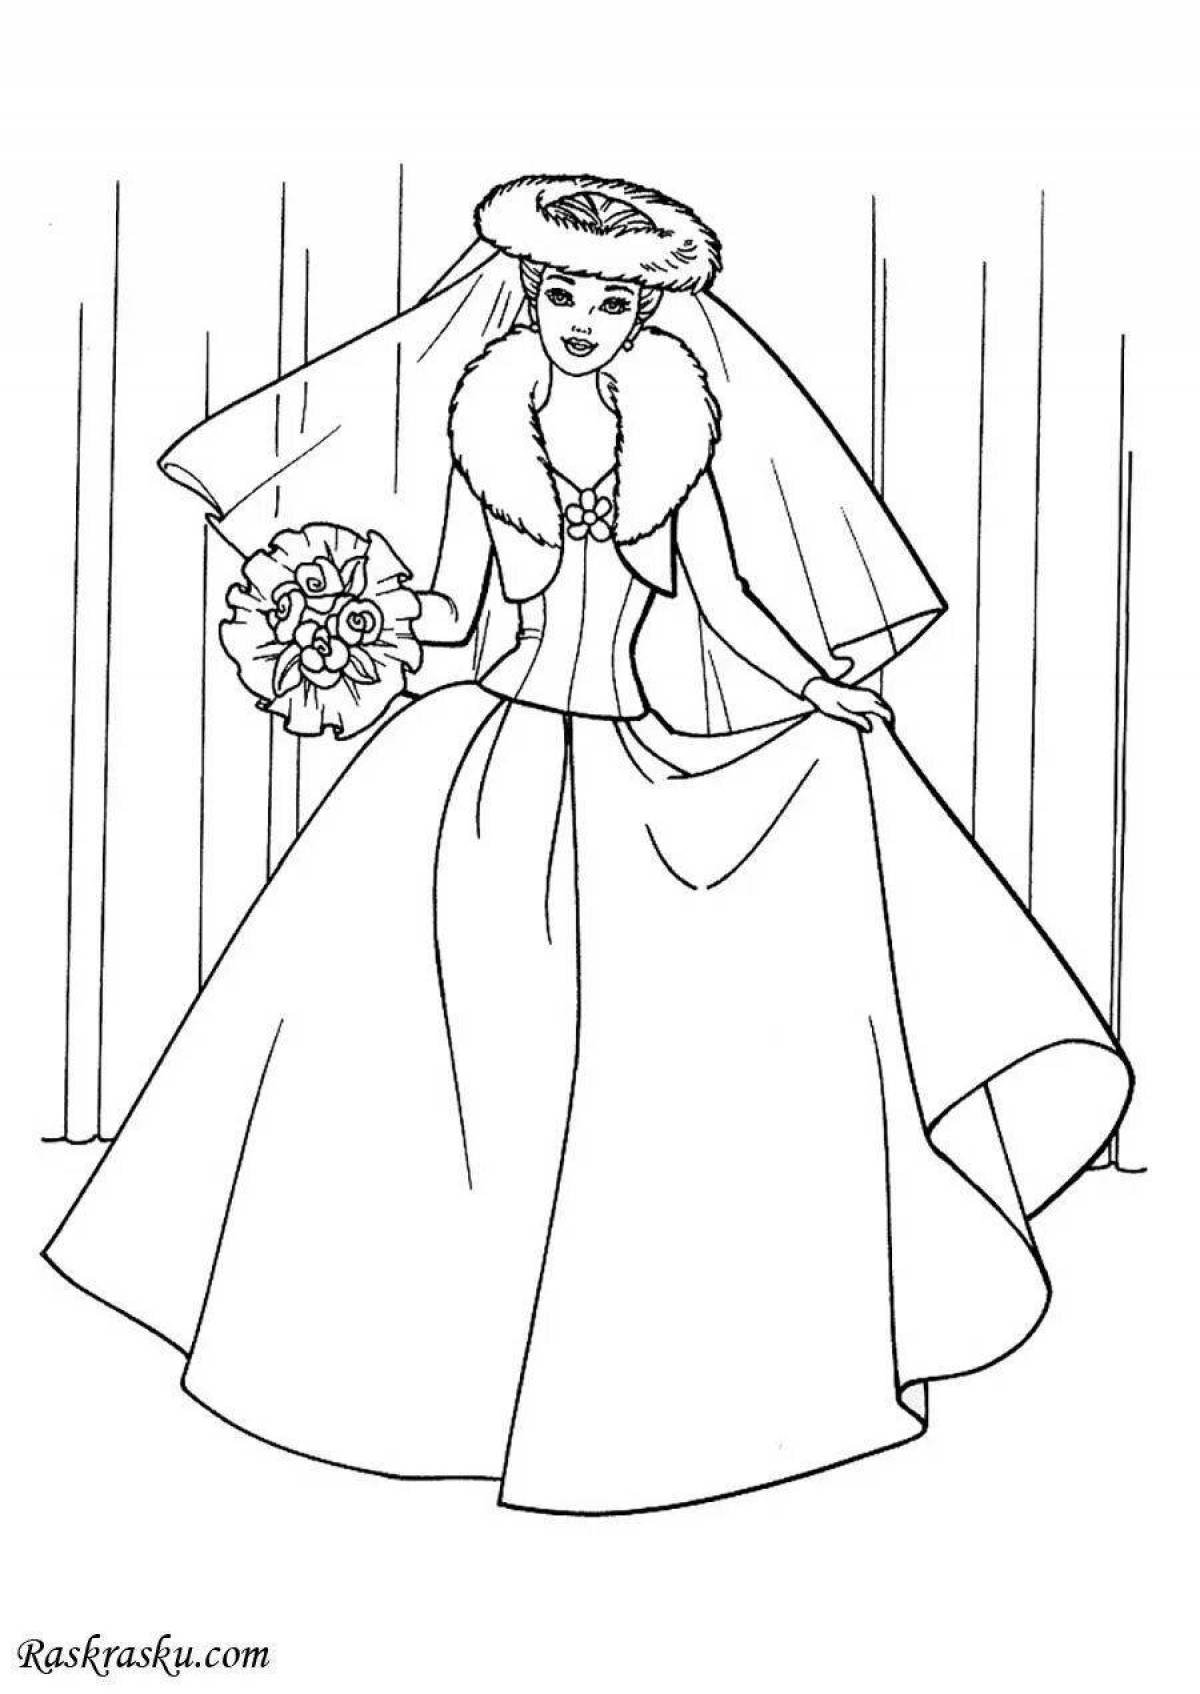 Majestic bride coloring page